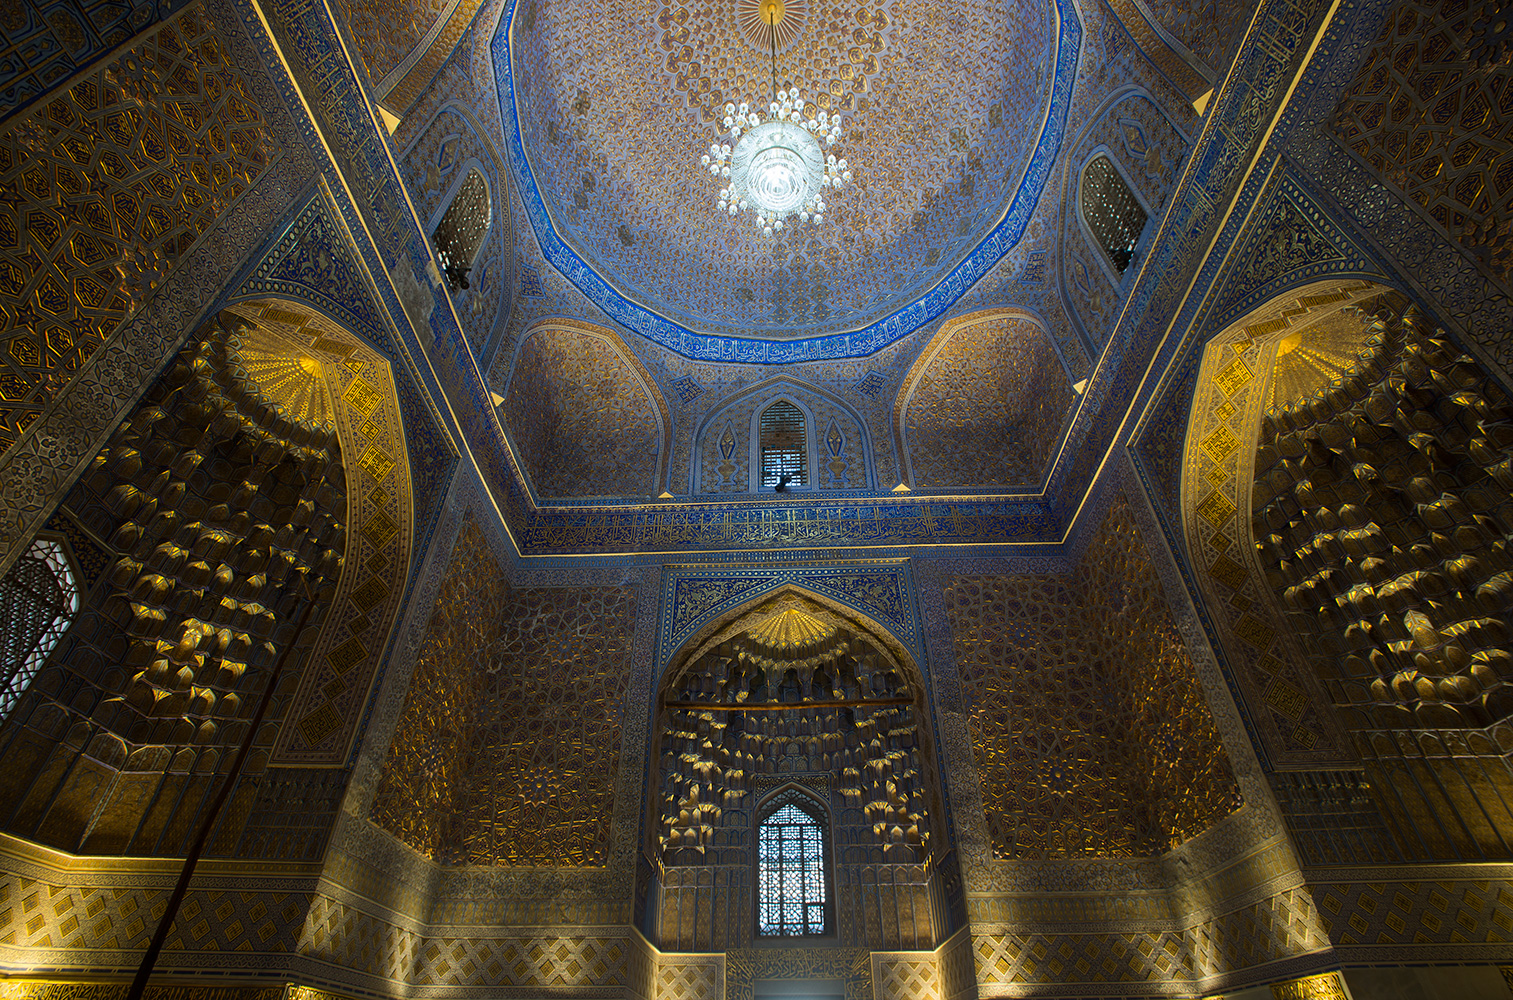 The Mausoleum of the Emir Timur